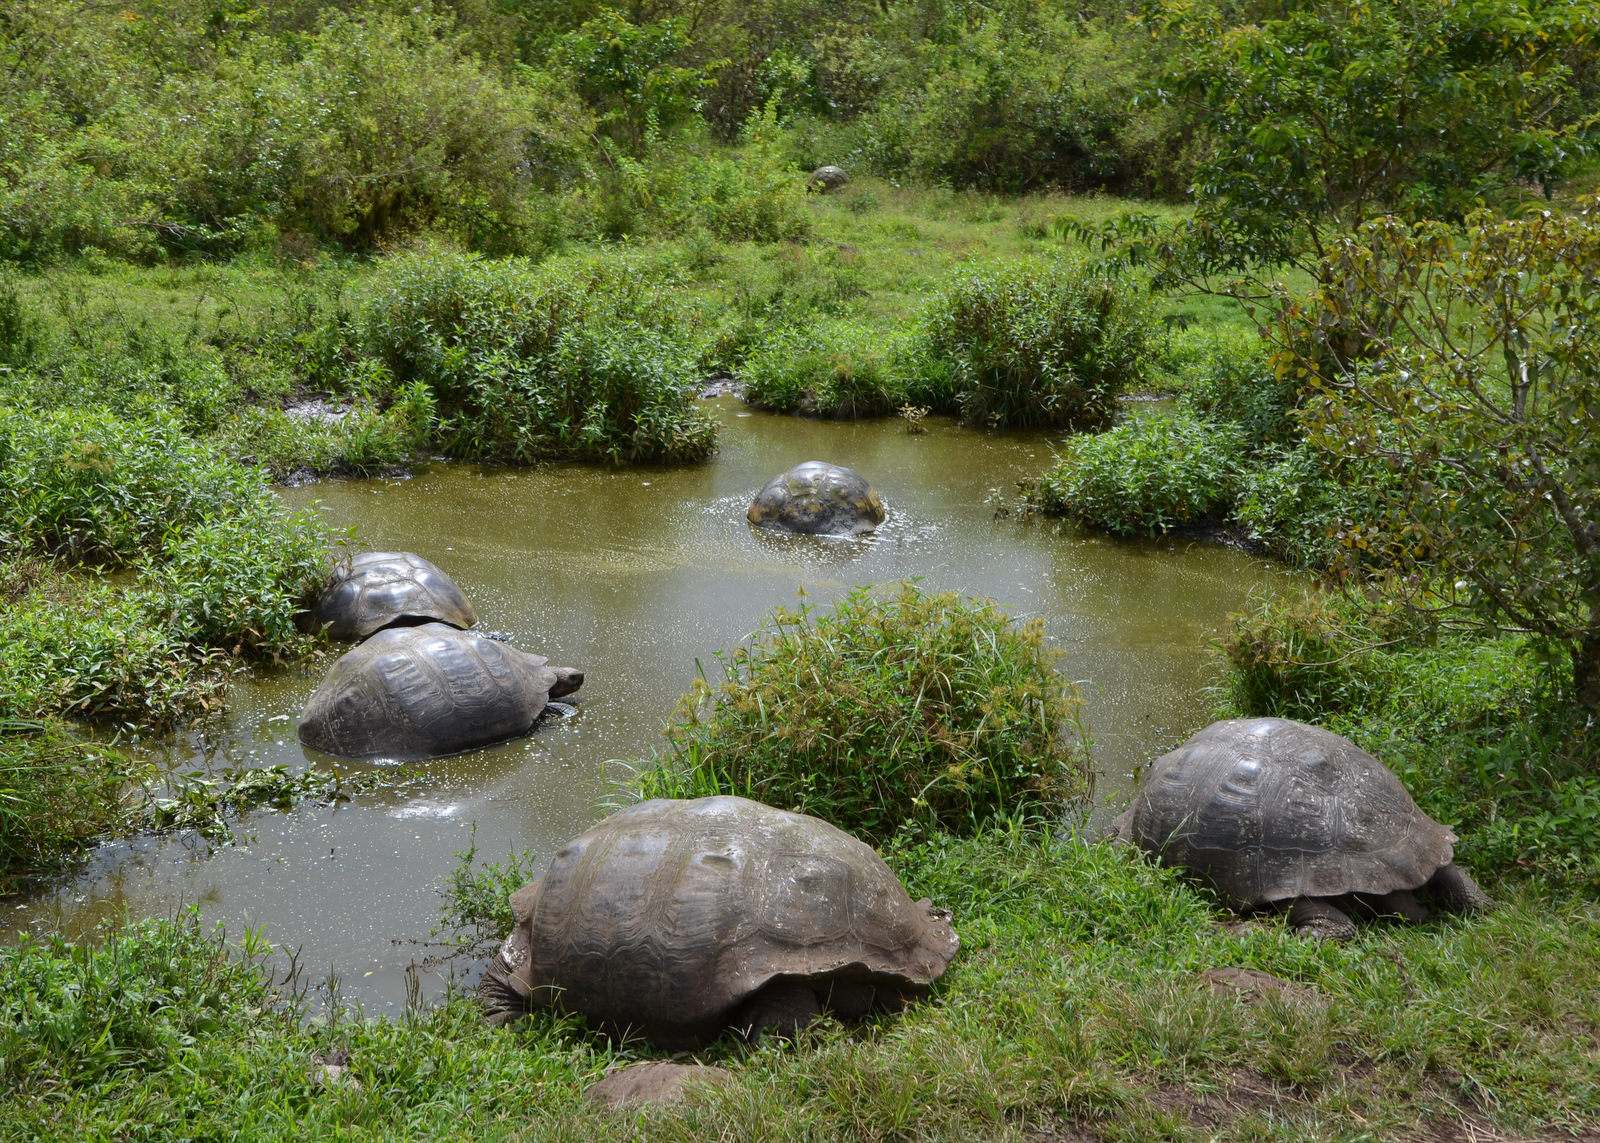 Tortoises in pond